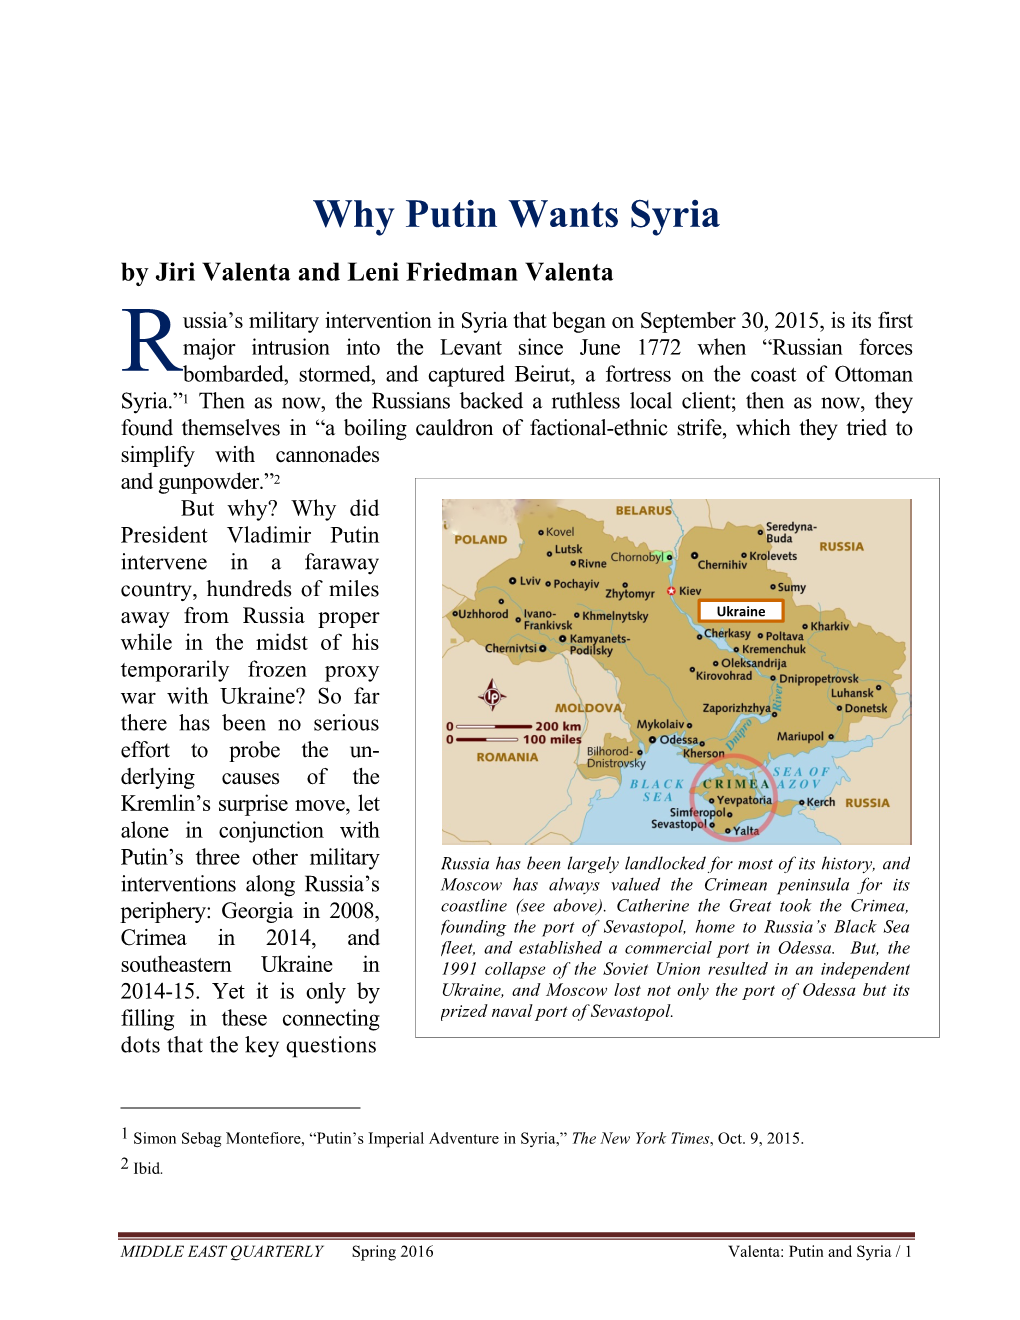 Why Putin Wants Syria by Jiri Valenta and Leni Friedman Valenta